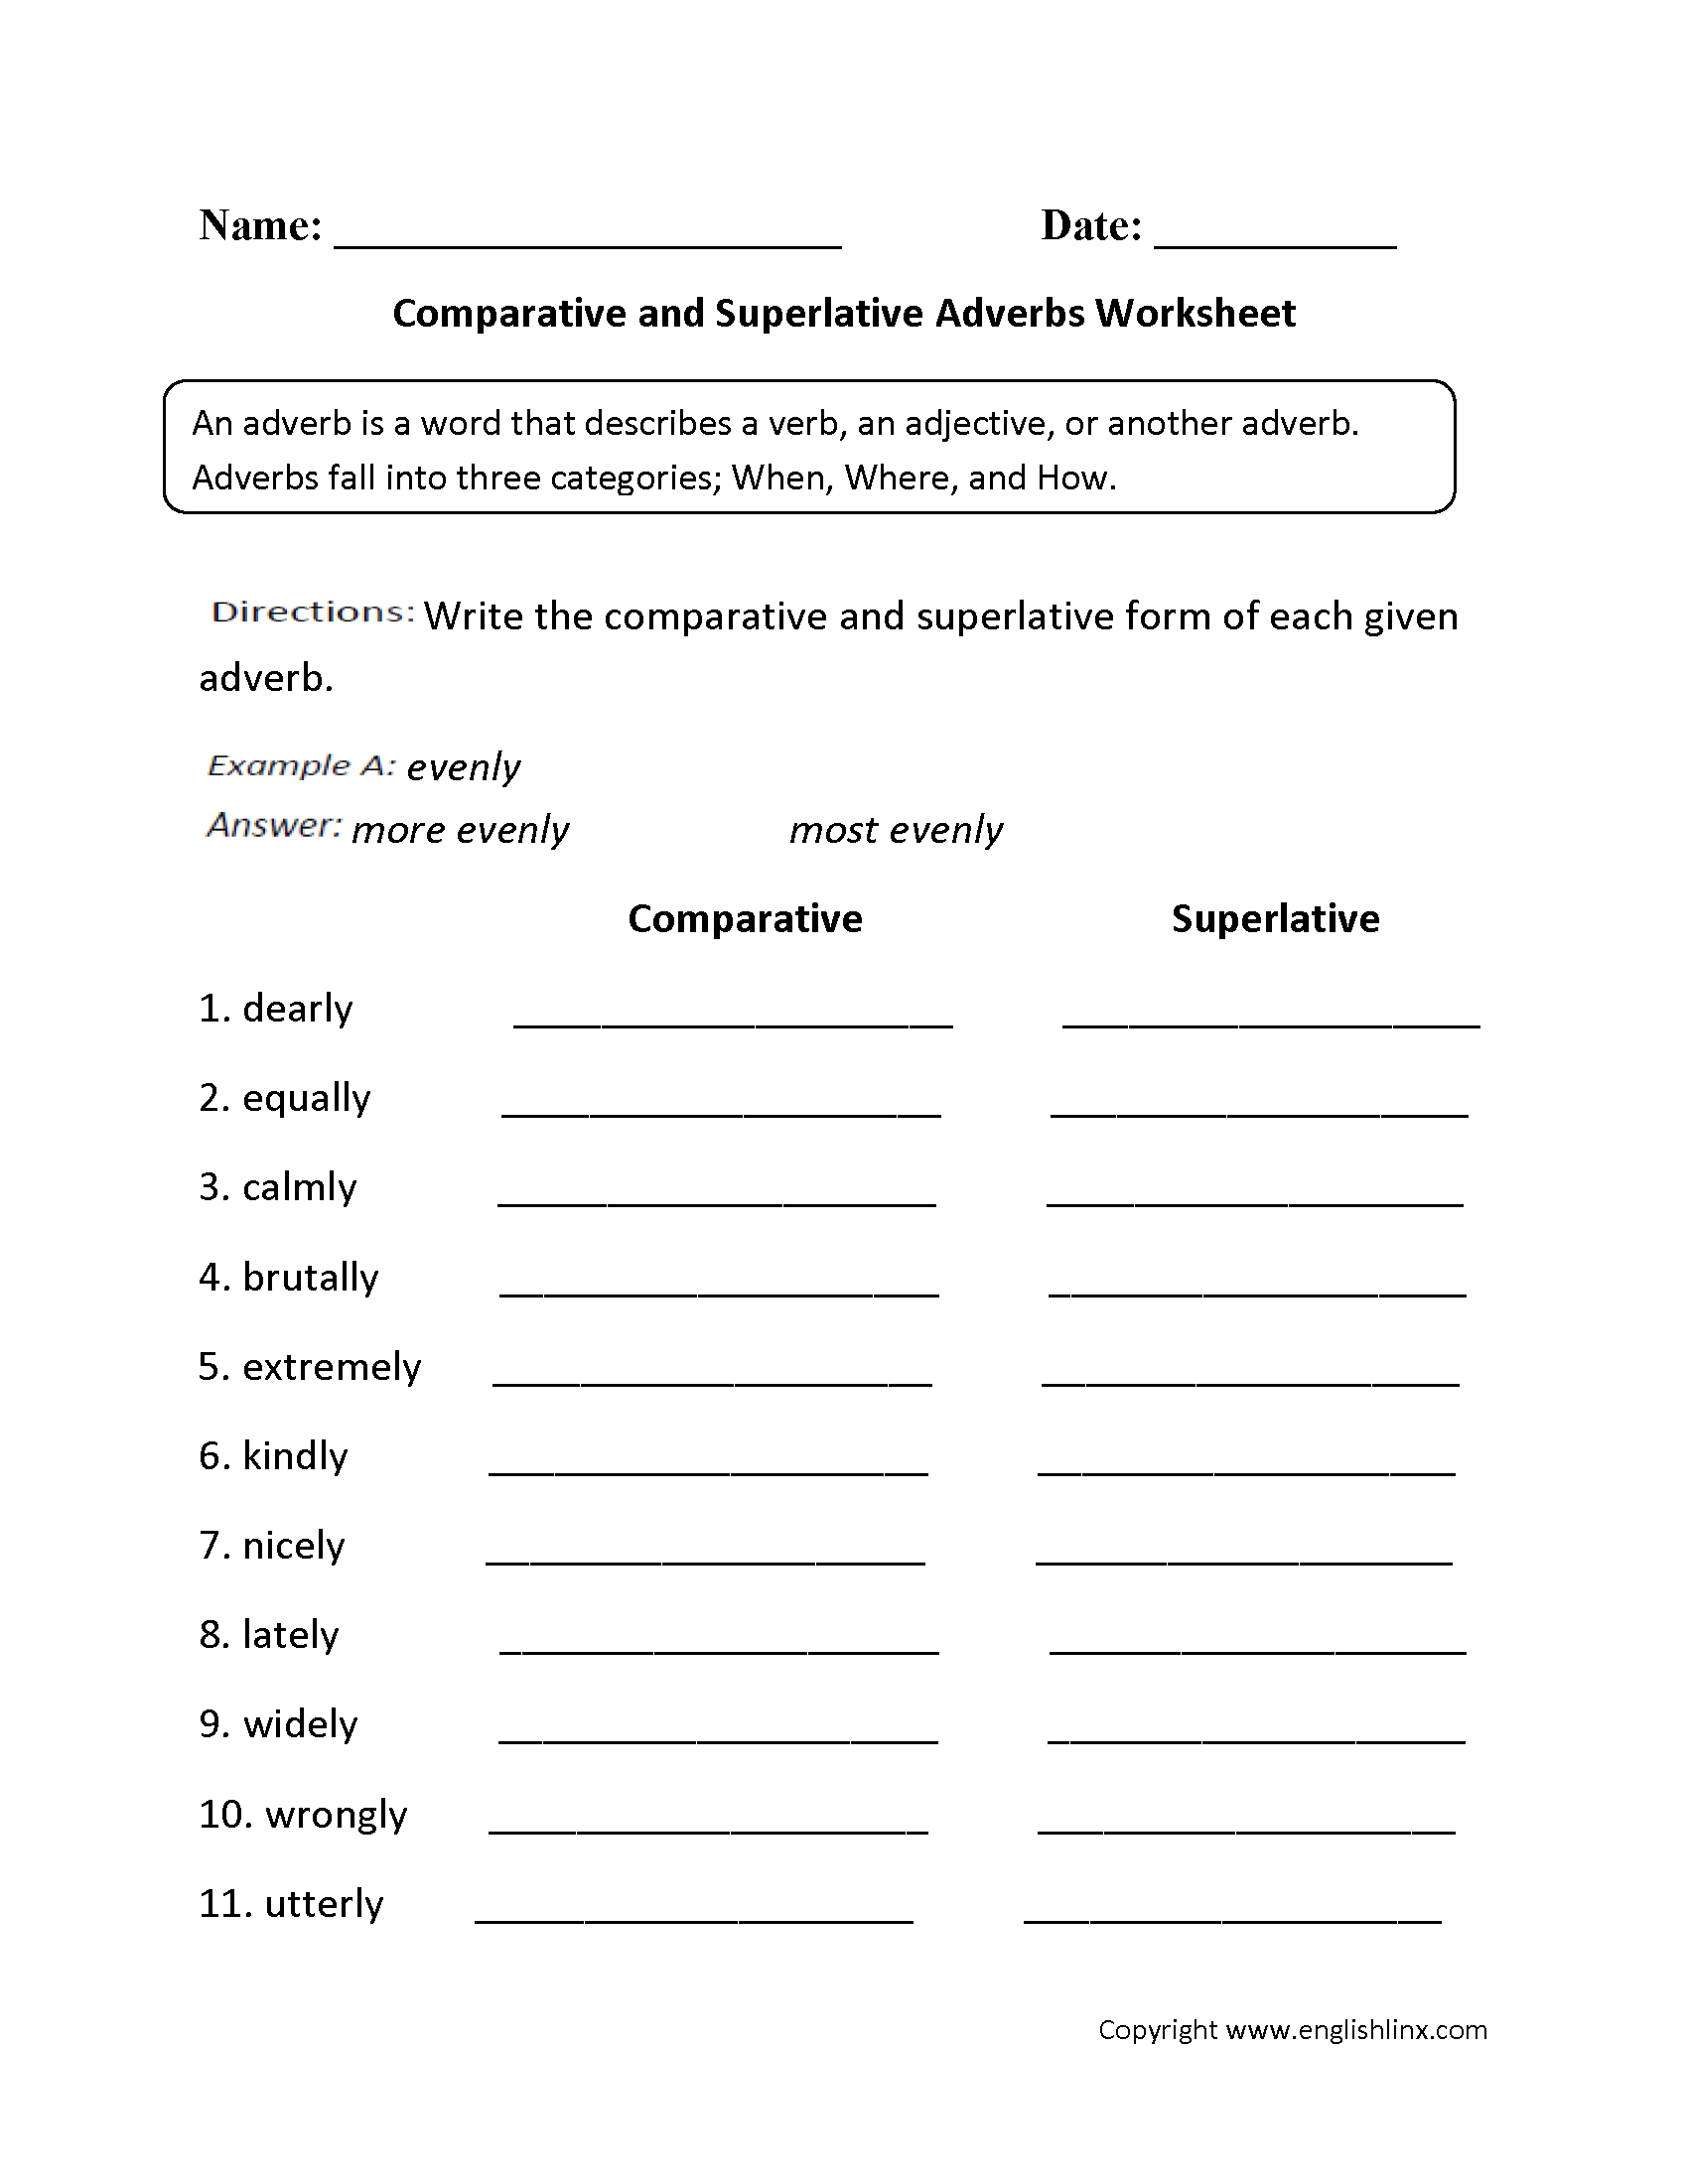 Superlative Adverbs Worksheet